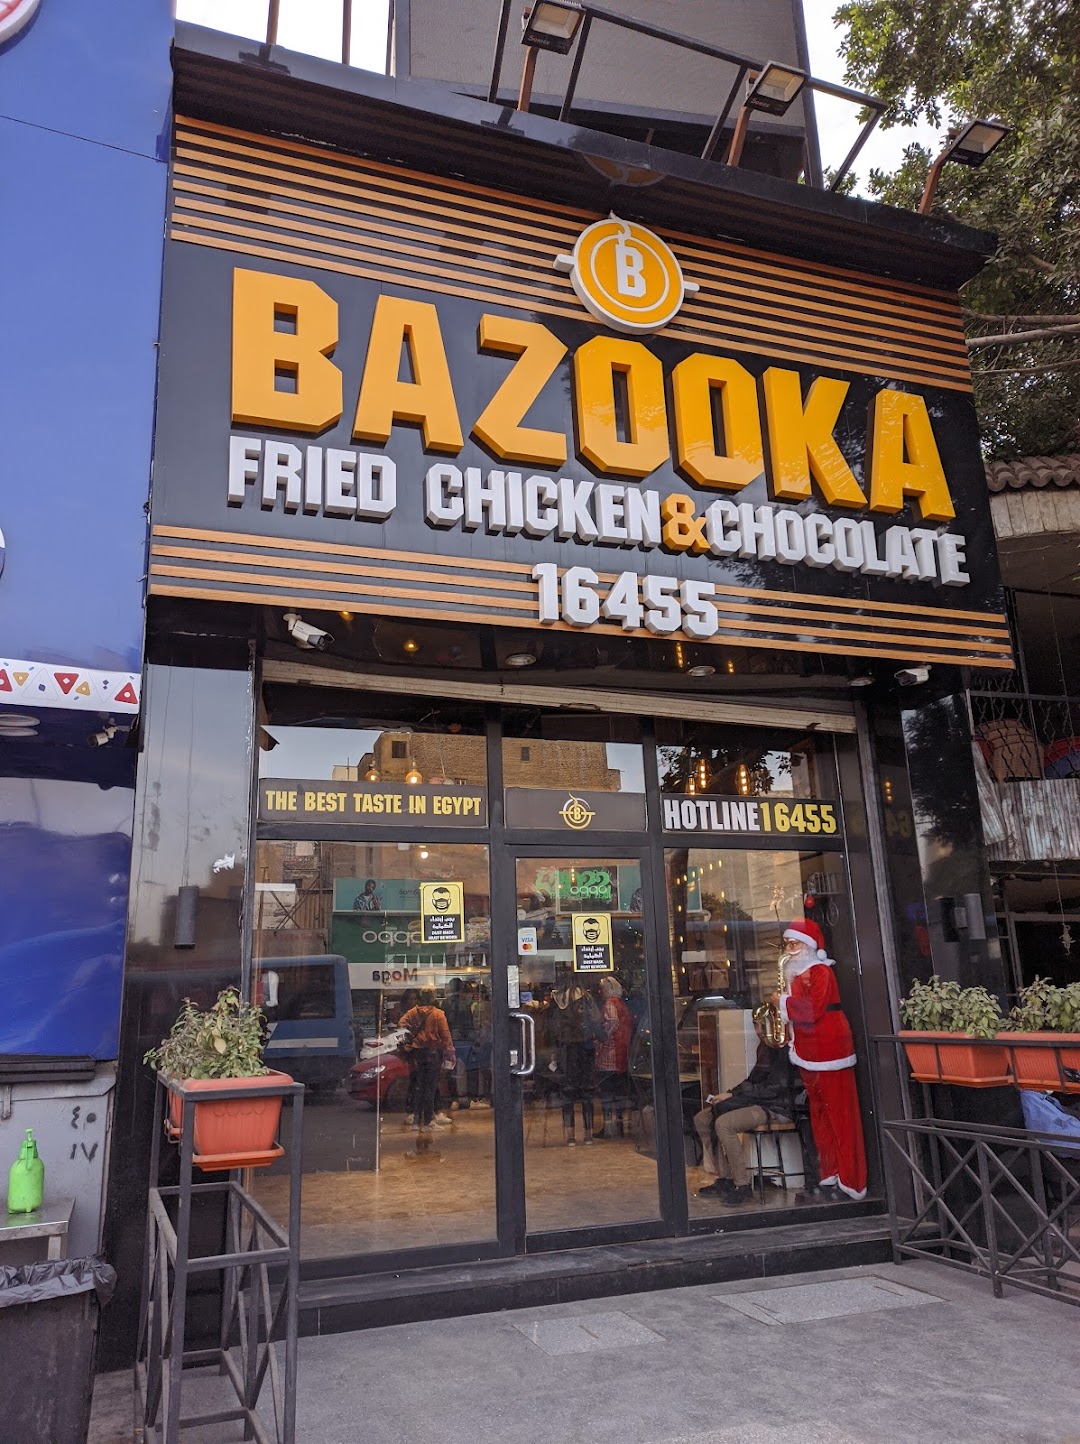 Bazooka Fried chicken